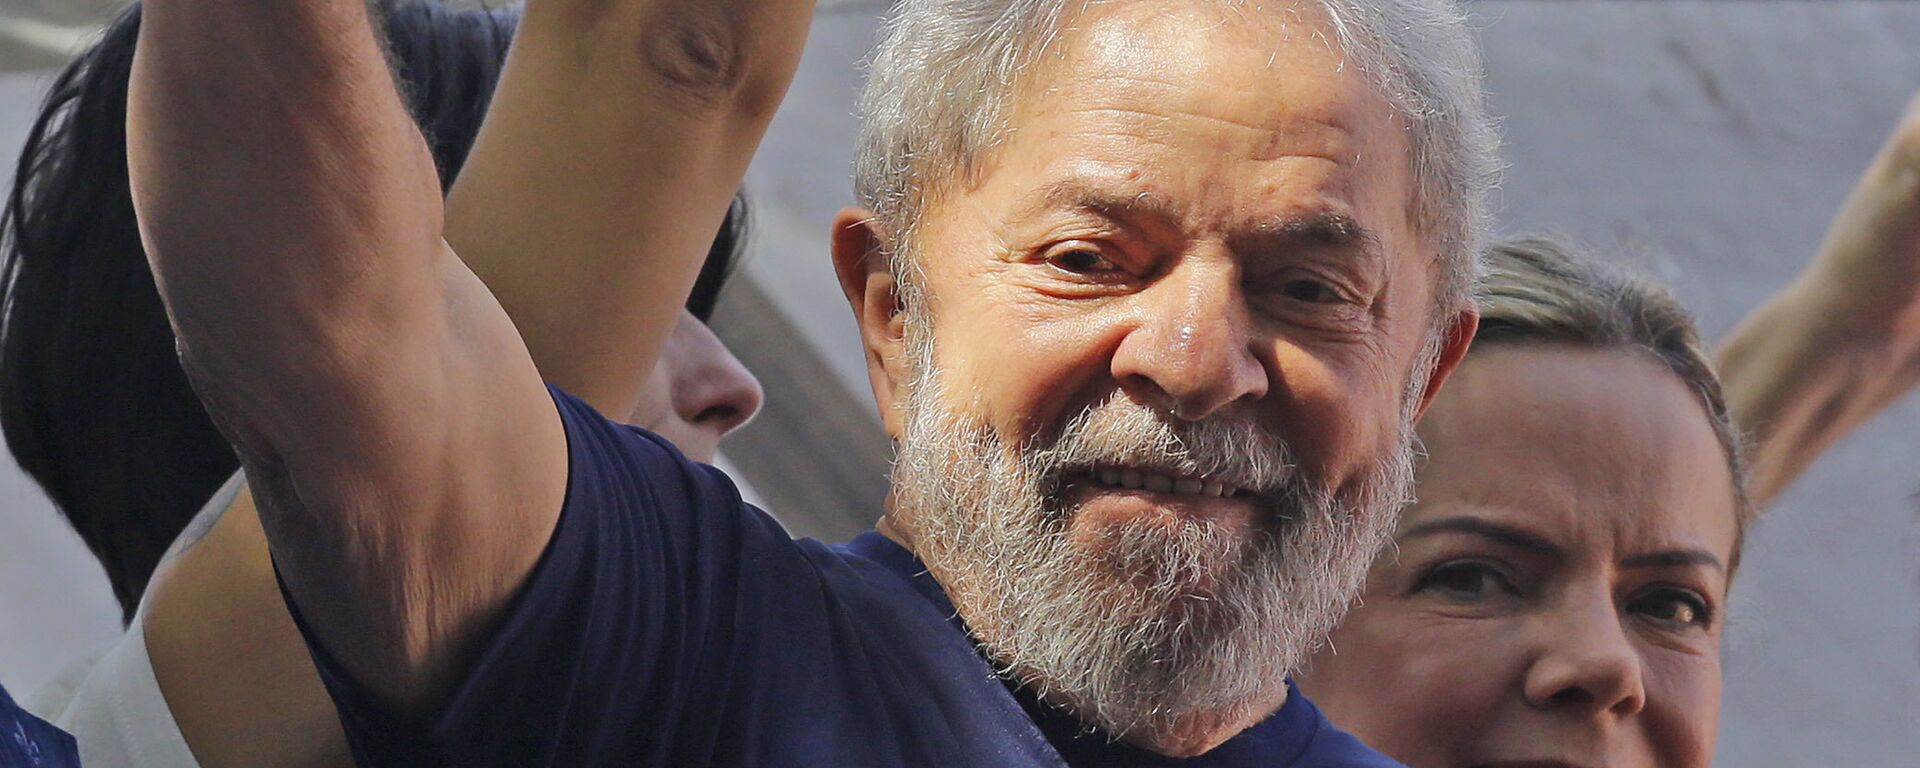 Luiz Inácio Lula da Silva, expresidente de Brasil  - Sputnik Mundo, 1920, 20.12.2021